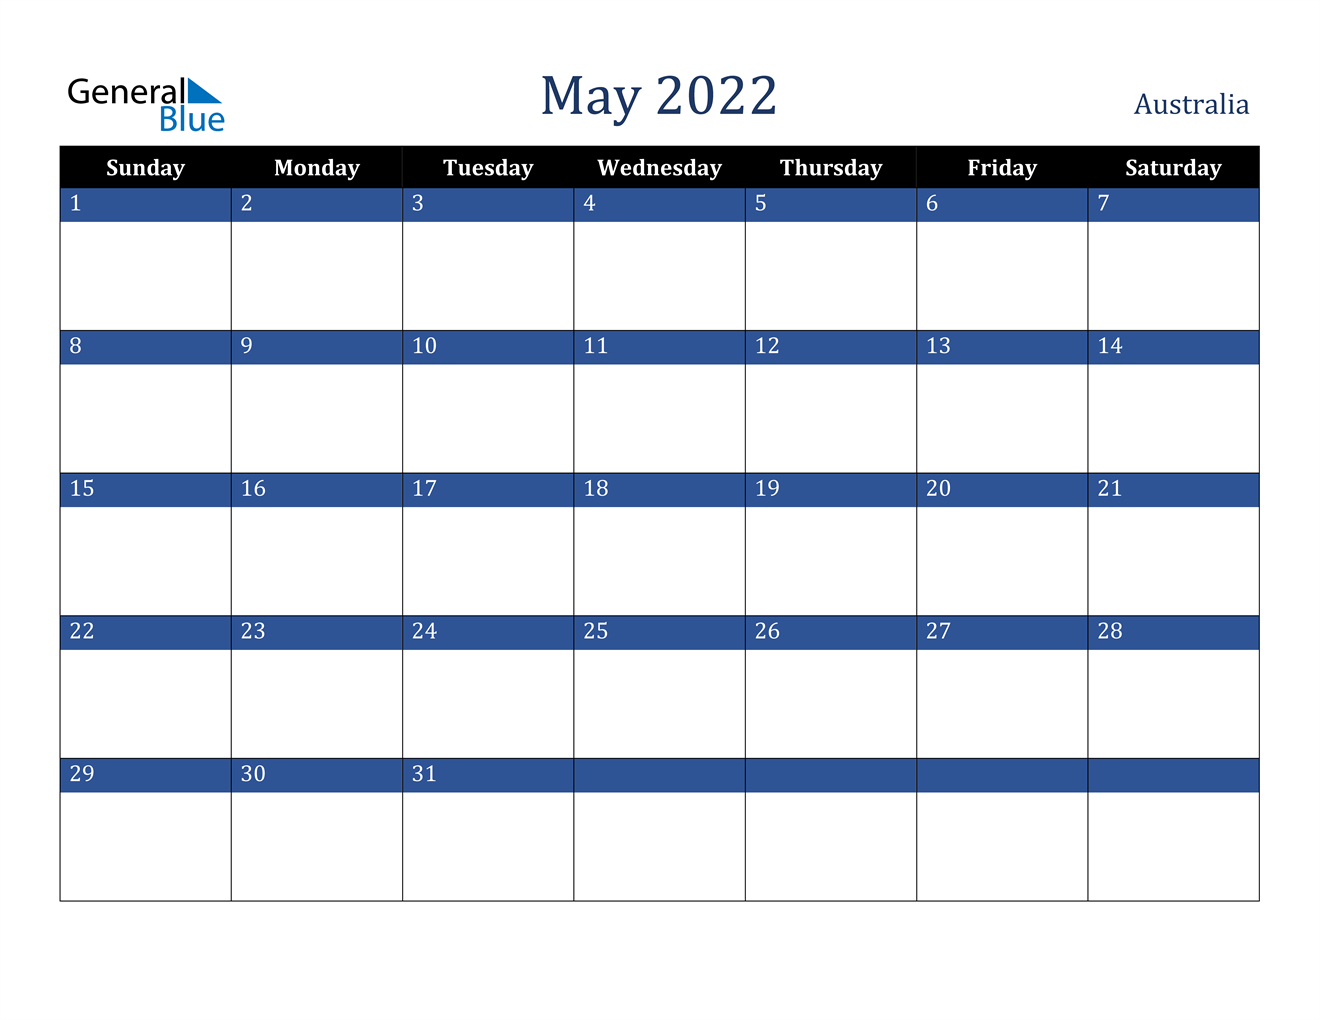 May 2022 Calendar - Australia